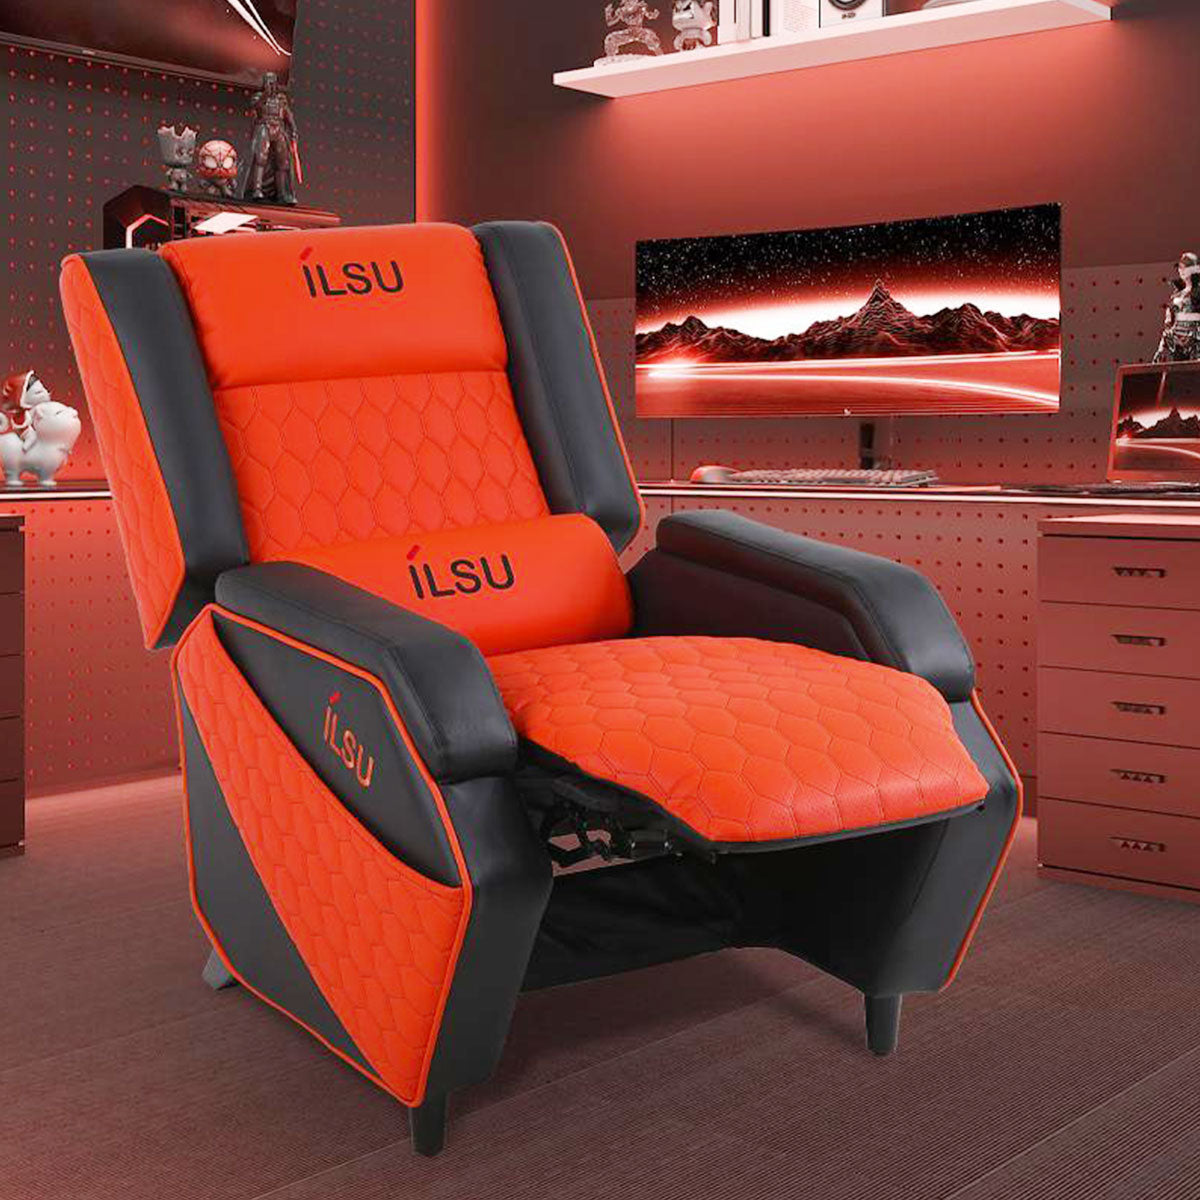 ILSU Knight Series Gaming Sofa Chair- Black